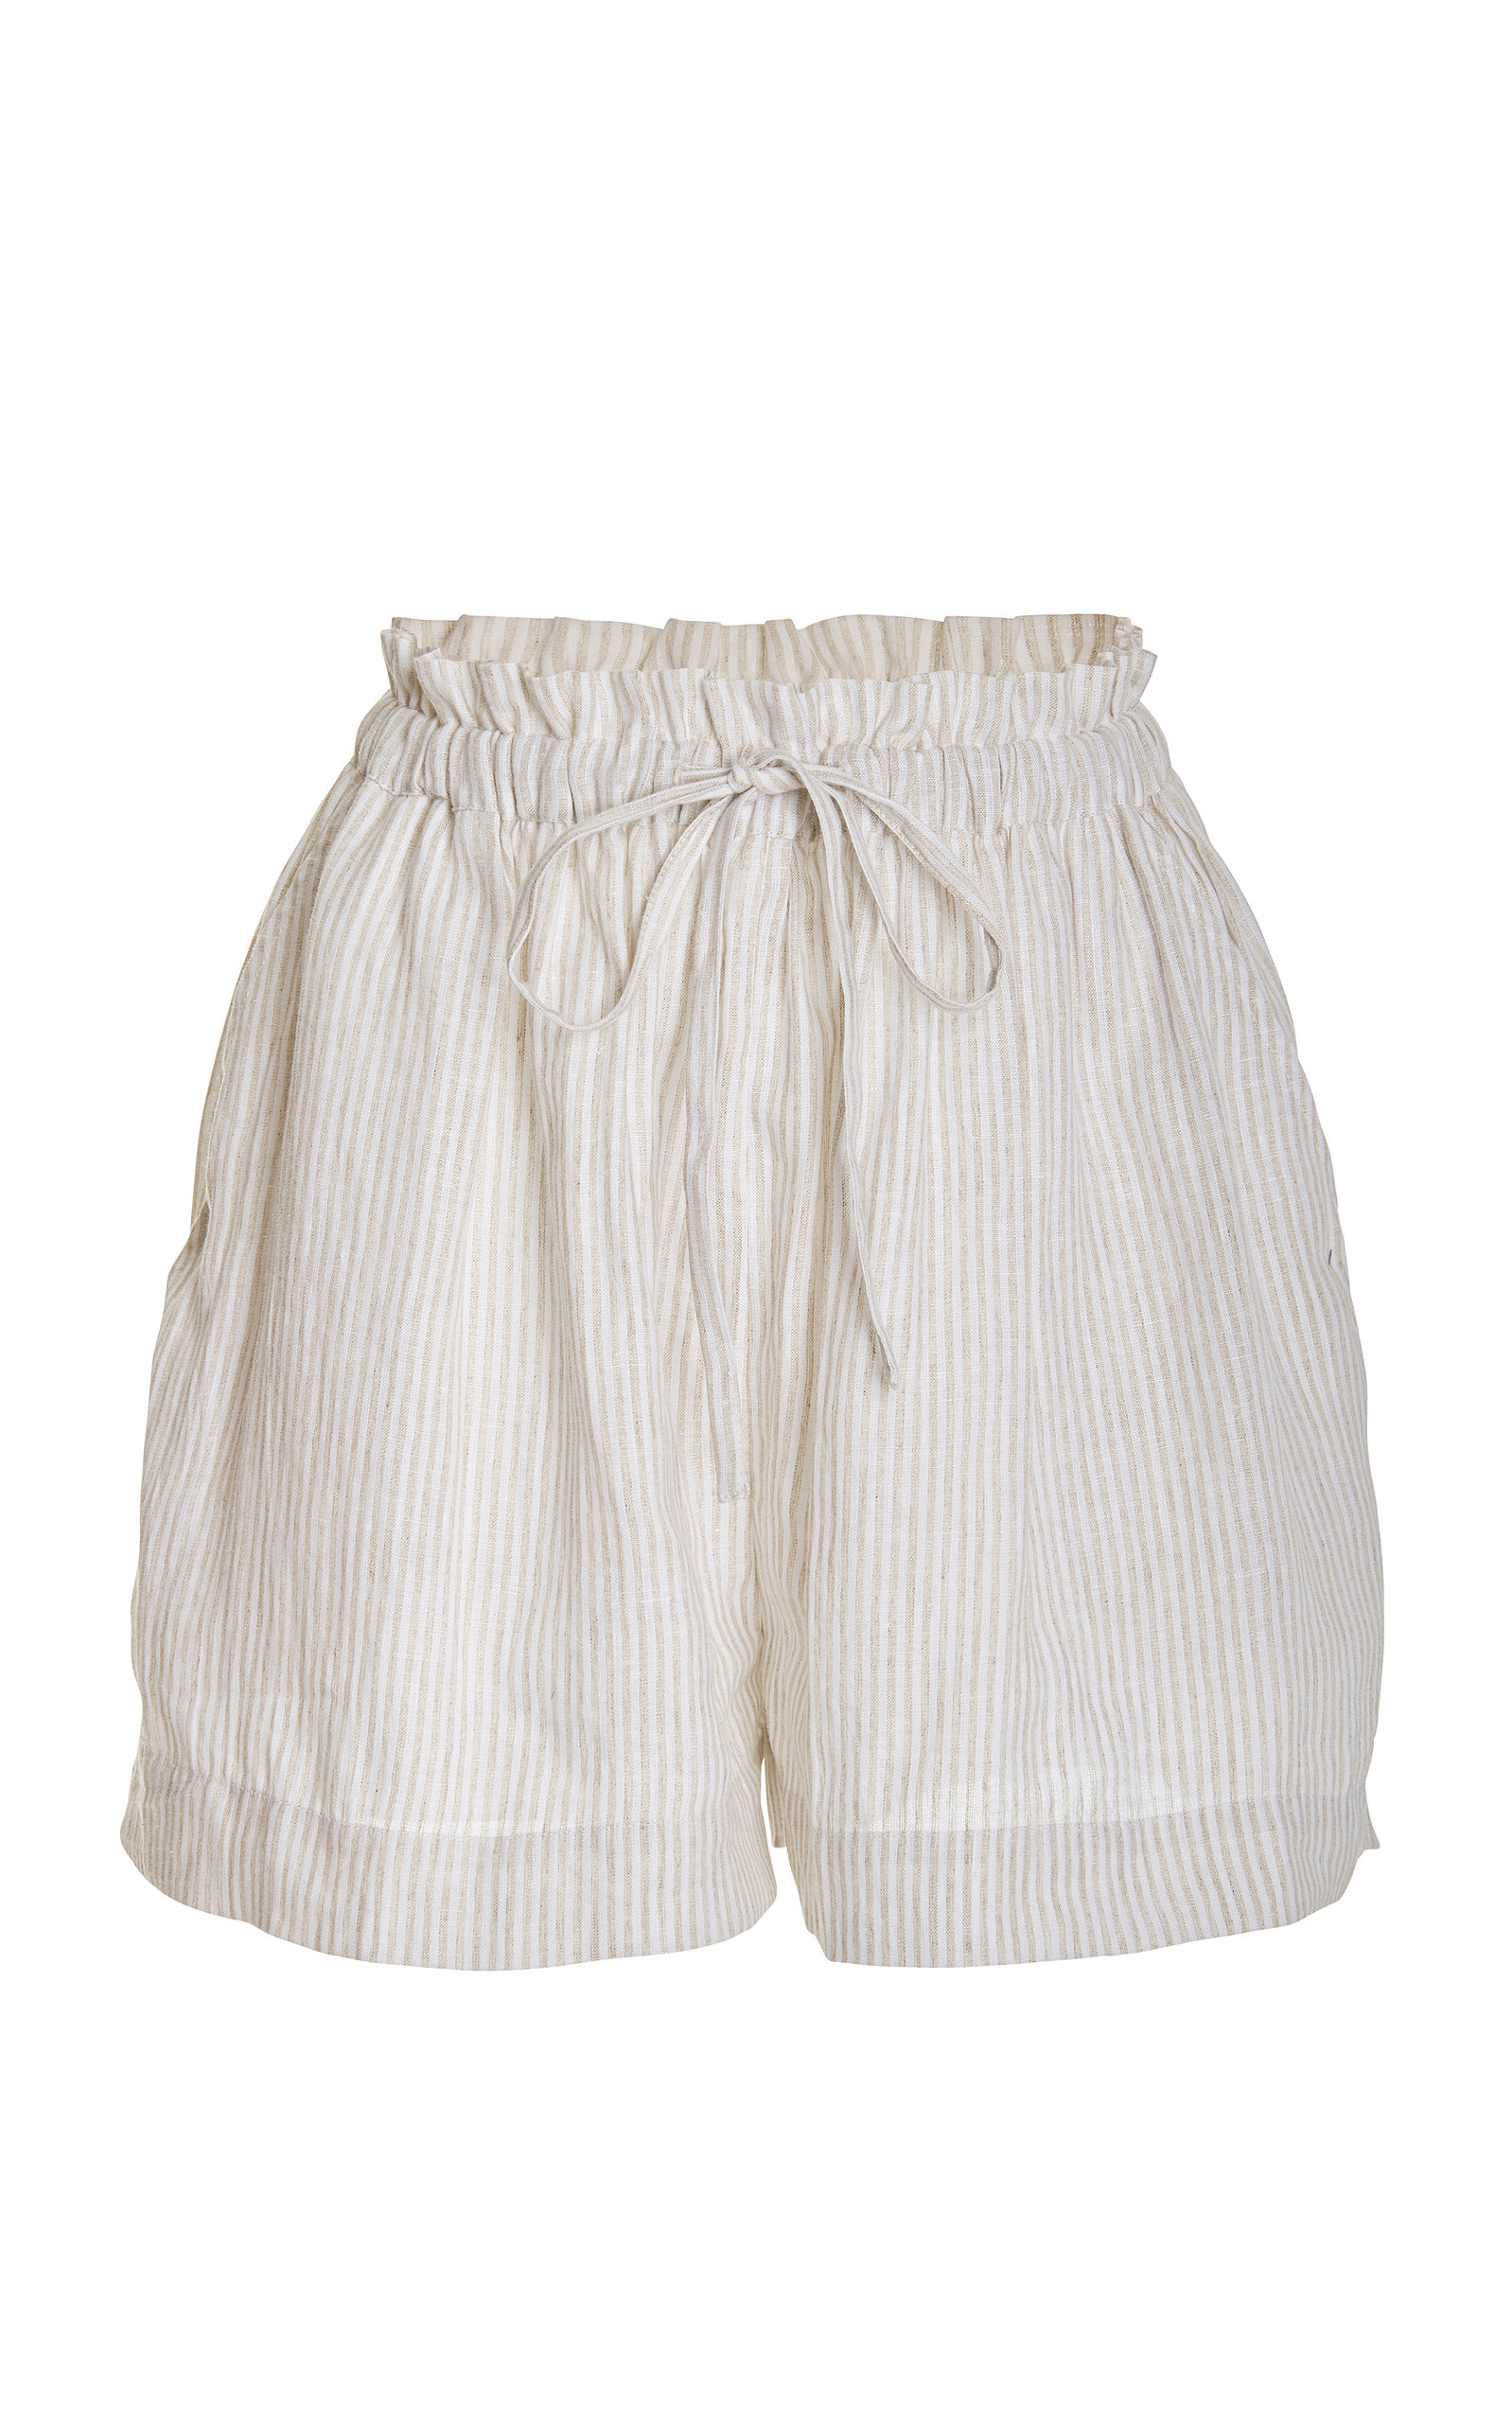 Ulla Johnson Women's Asa Cotton Mini Shorts